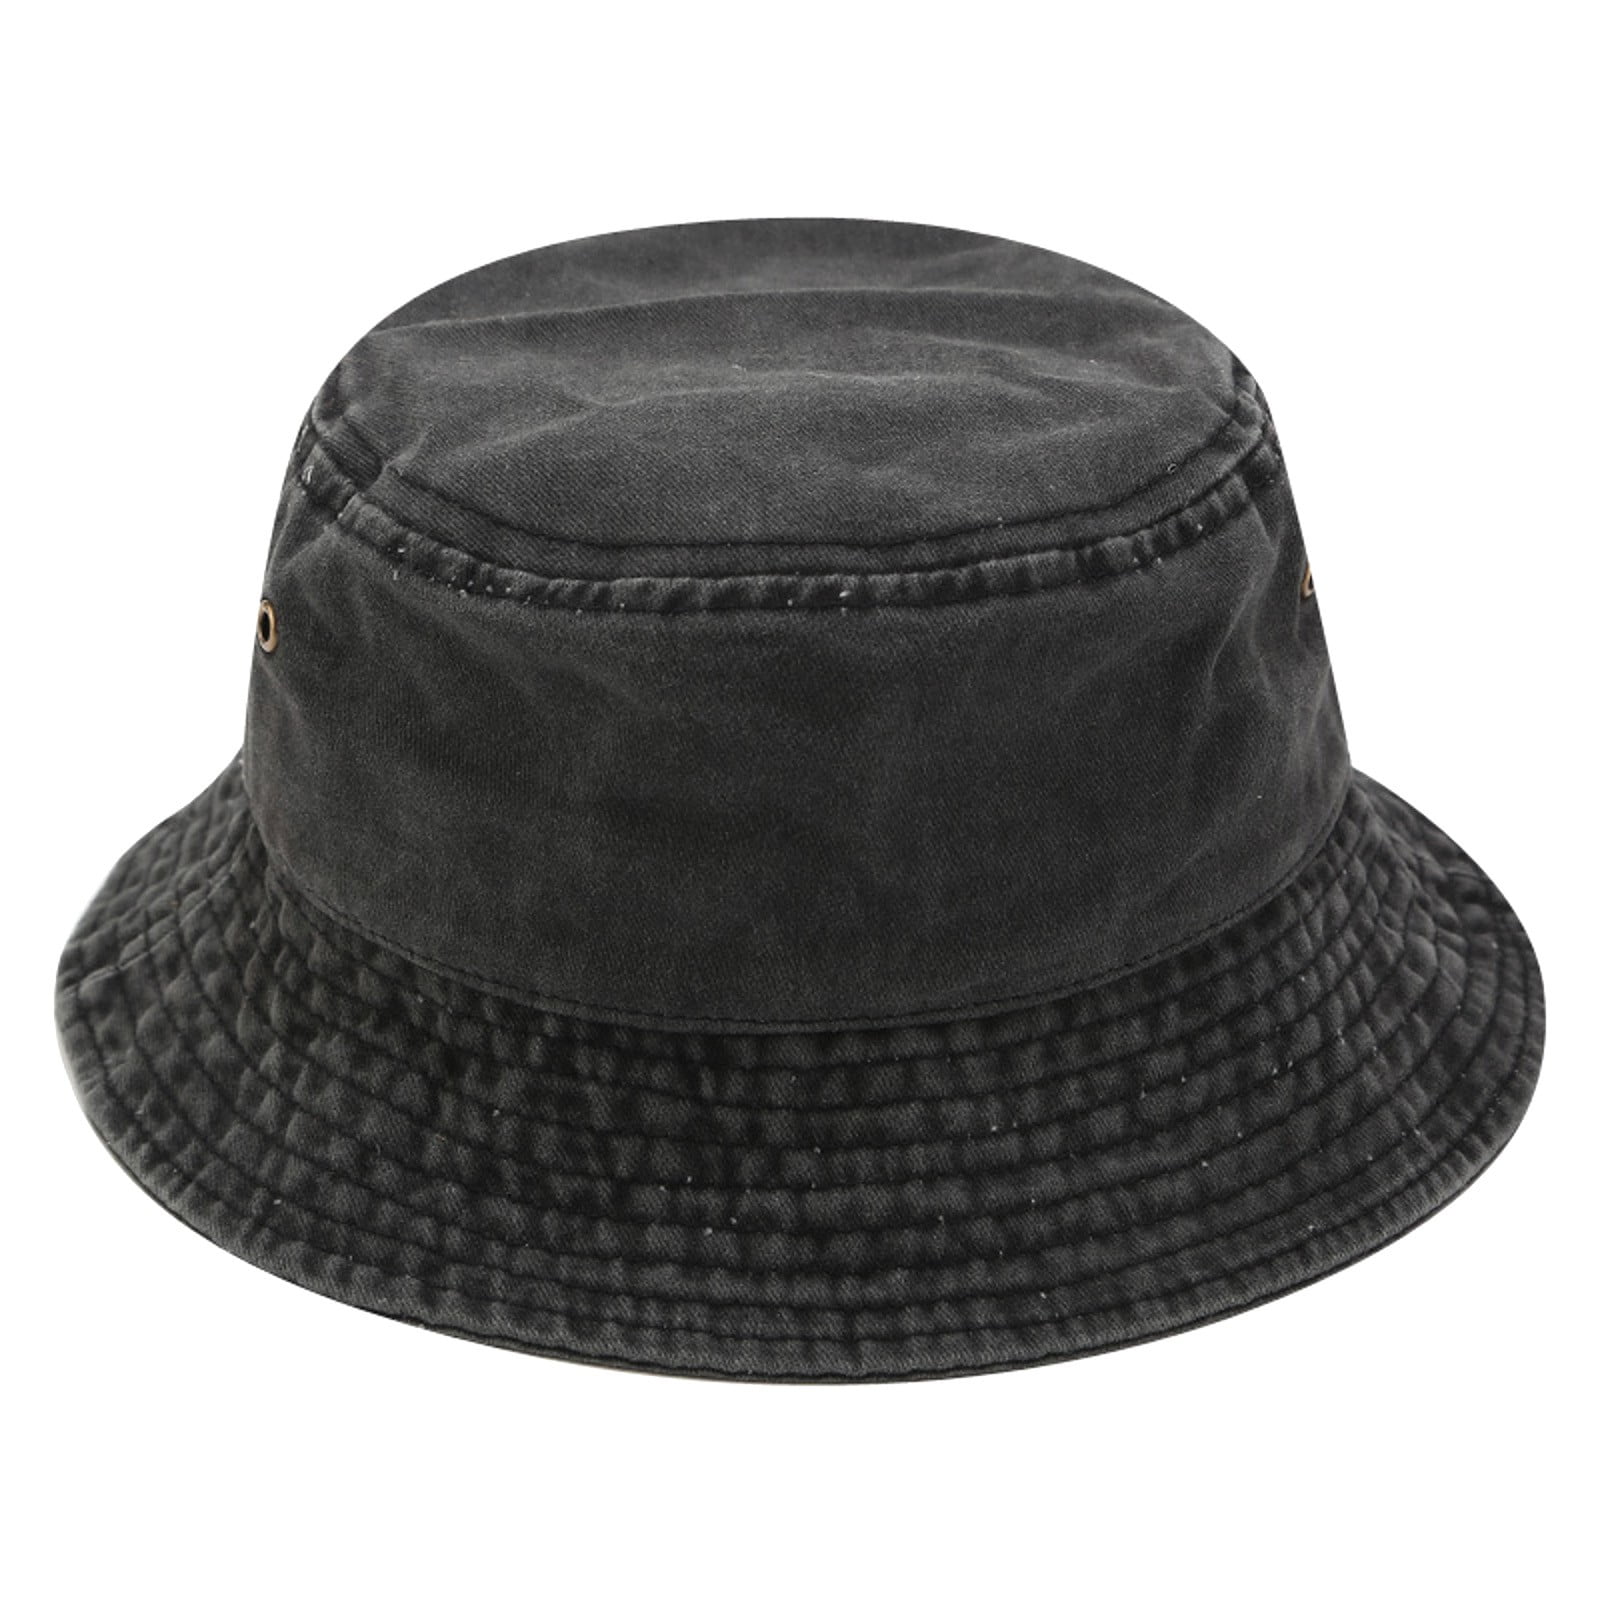 Beugl Bucket Hat Clearance, Floppy Beach Hats for Women Outdoor Sun ...